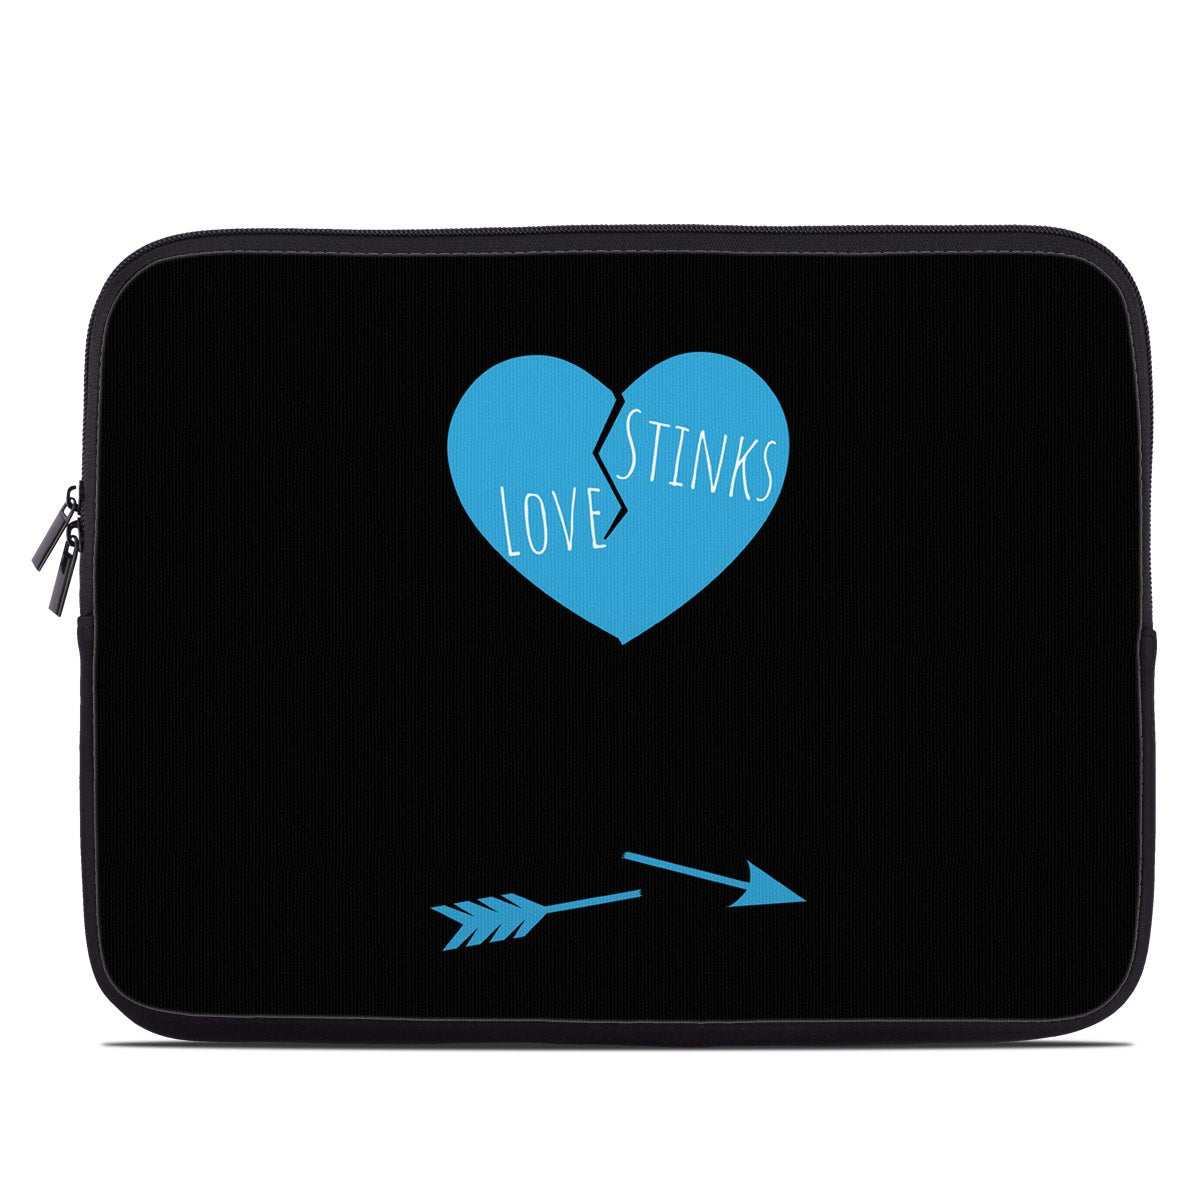 Love Stinks - Laptop Sleeve